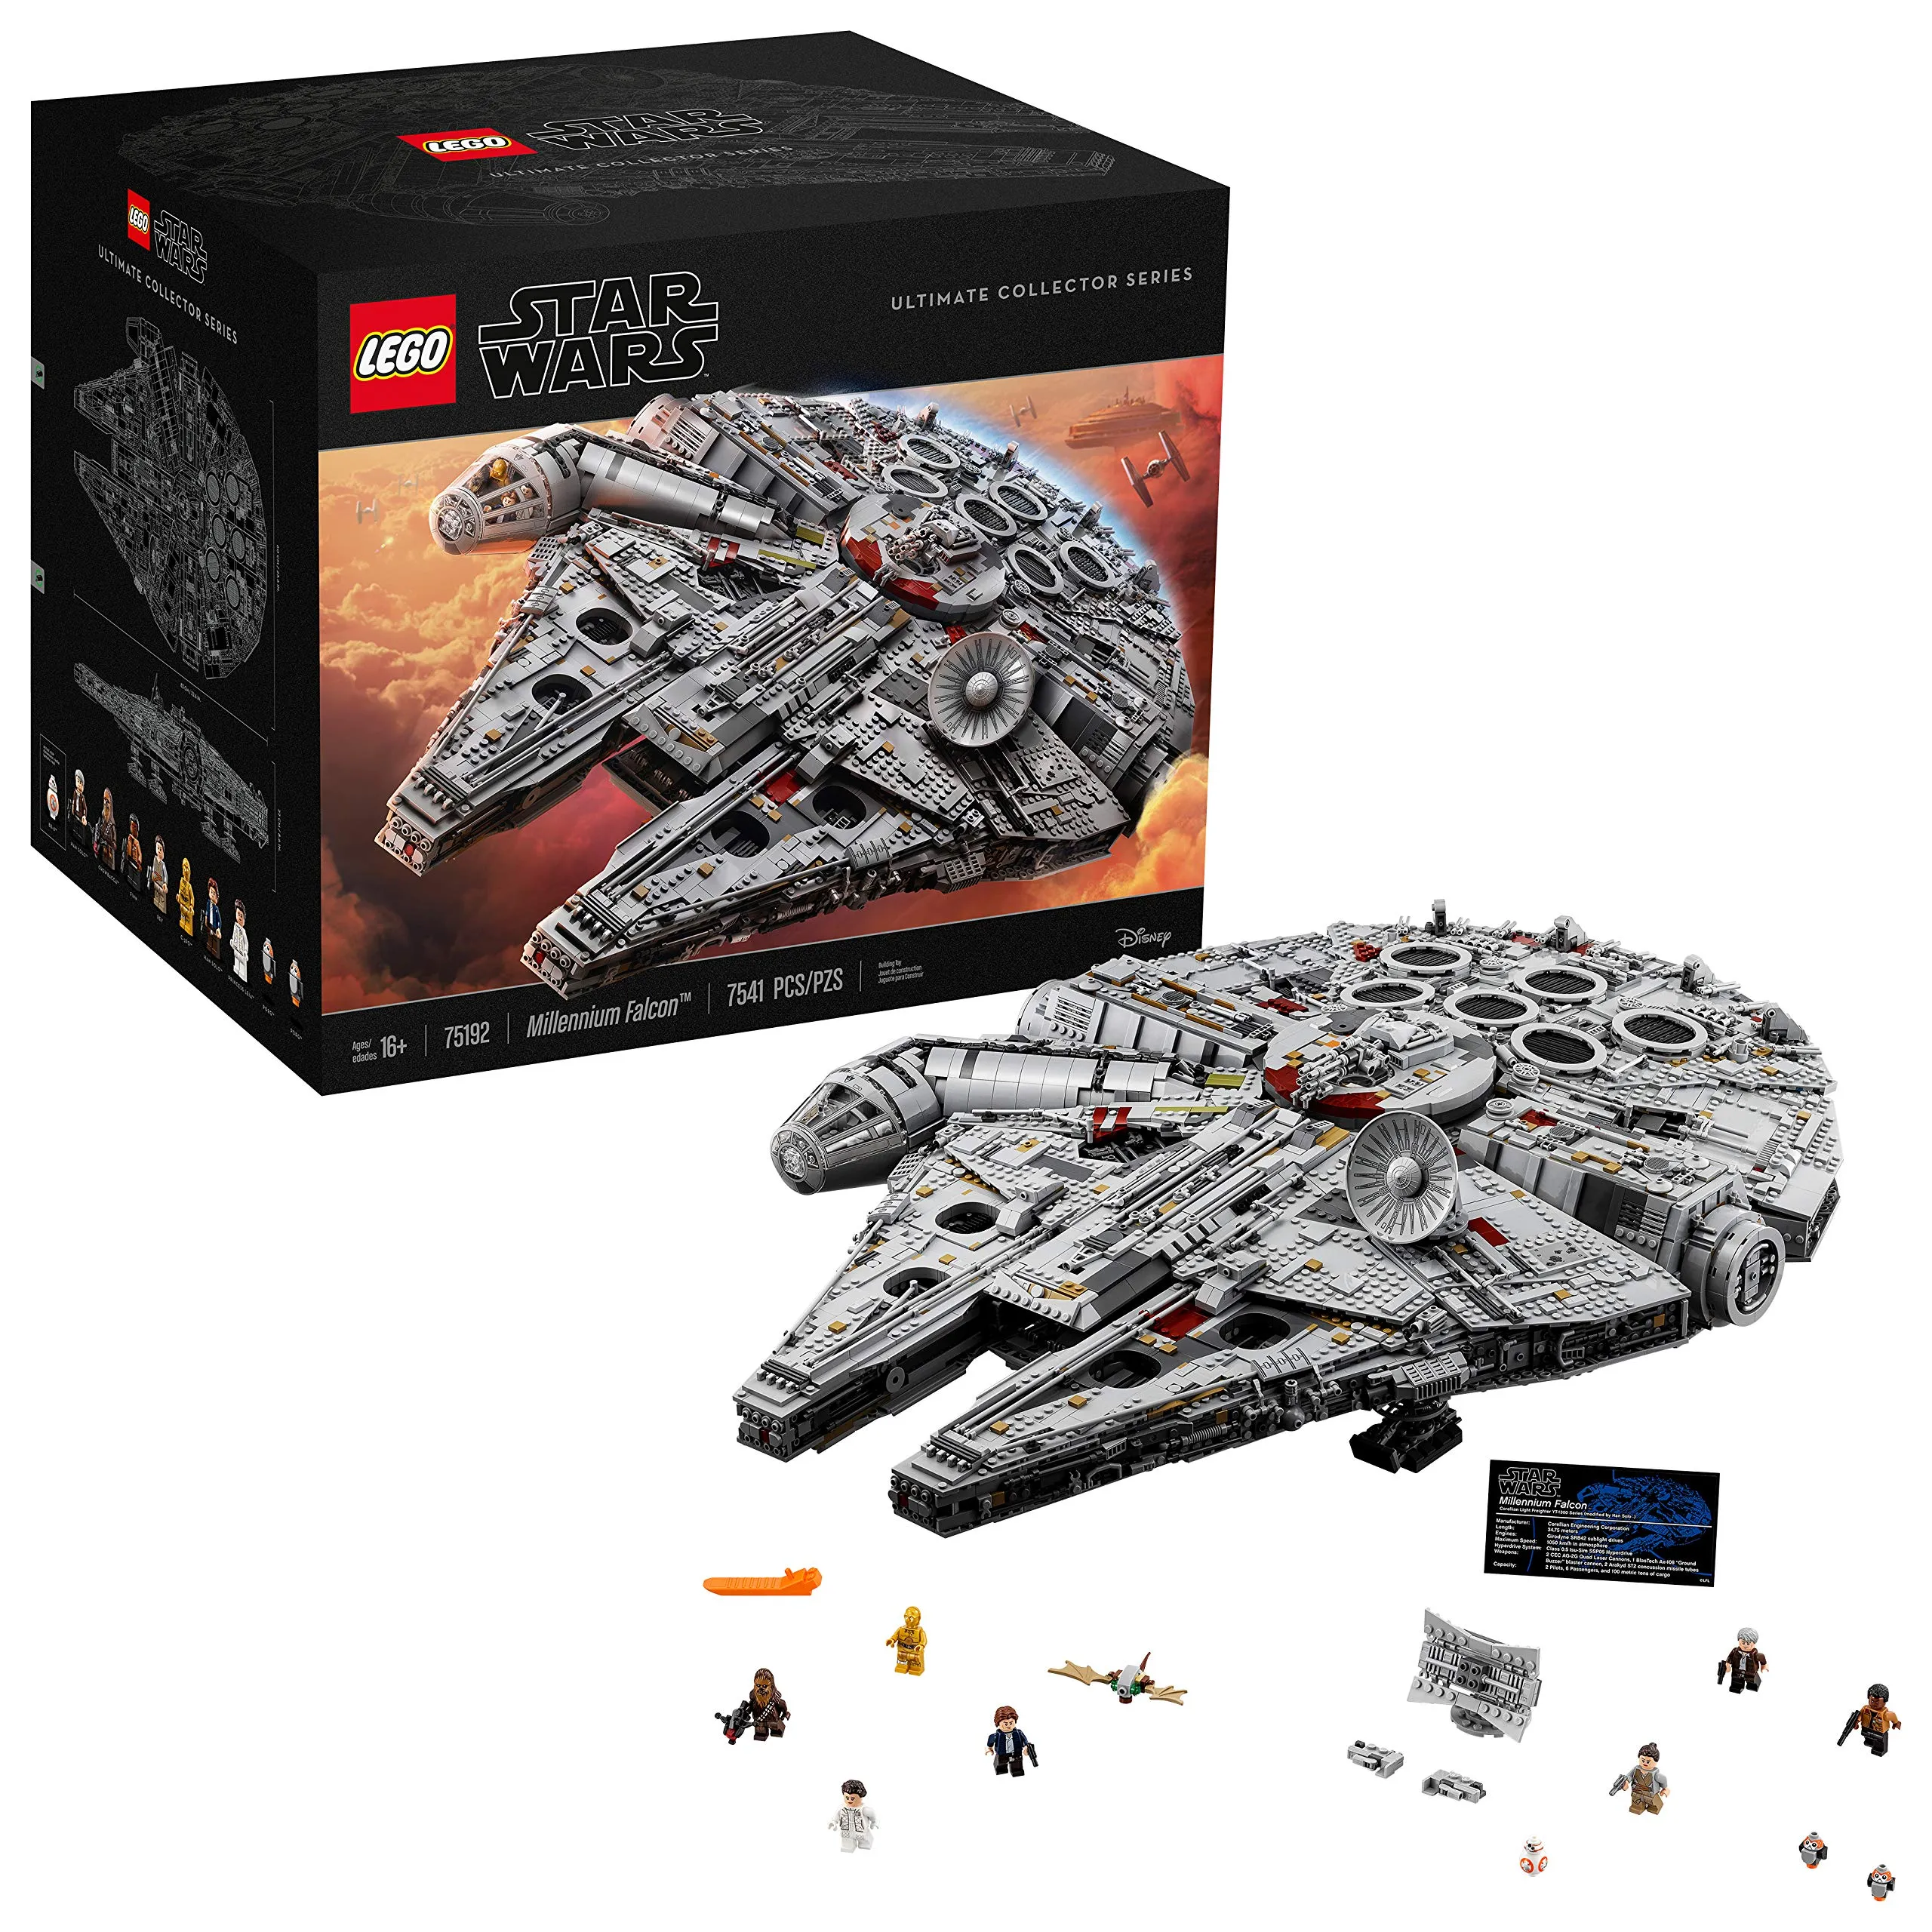 LEGO Star Wars Ultimate Millennium Falcon 75192 Expert Building Kit